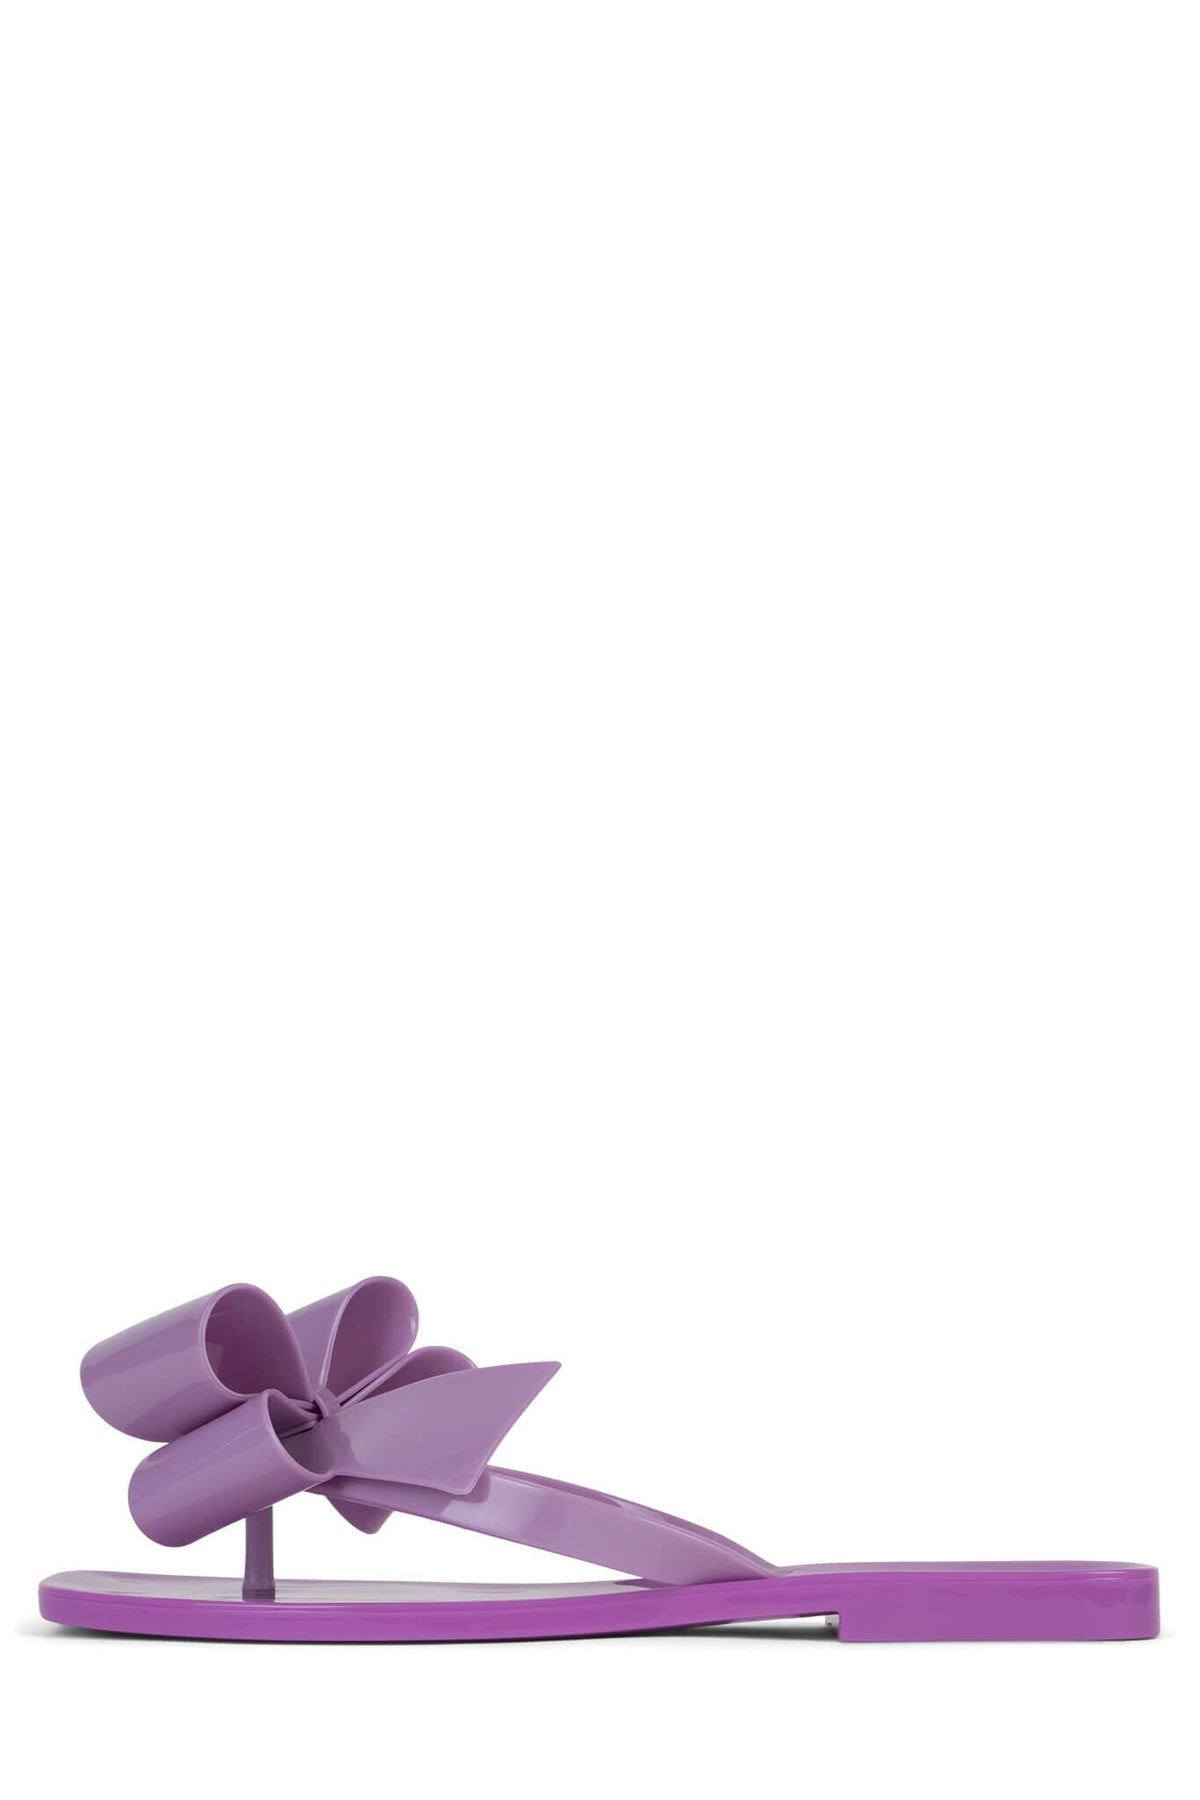 SUGARY Jeffrey Campbell Jelly Sandal Lilac Shiny